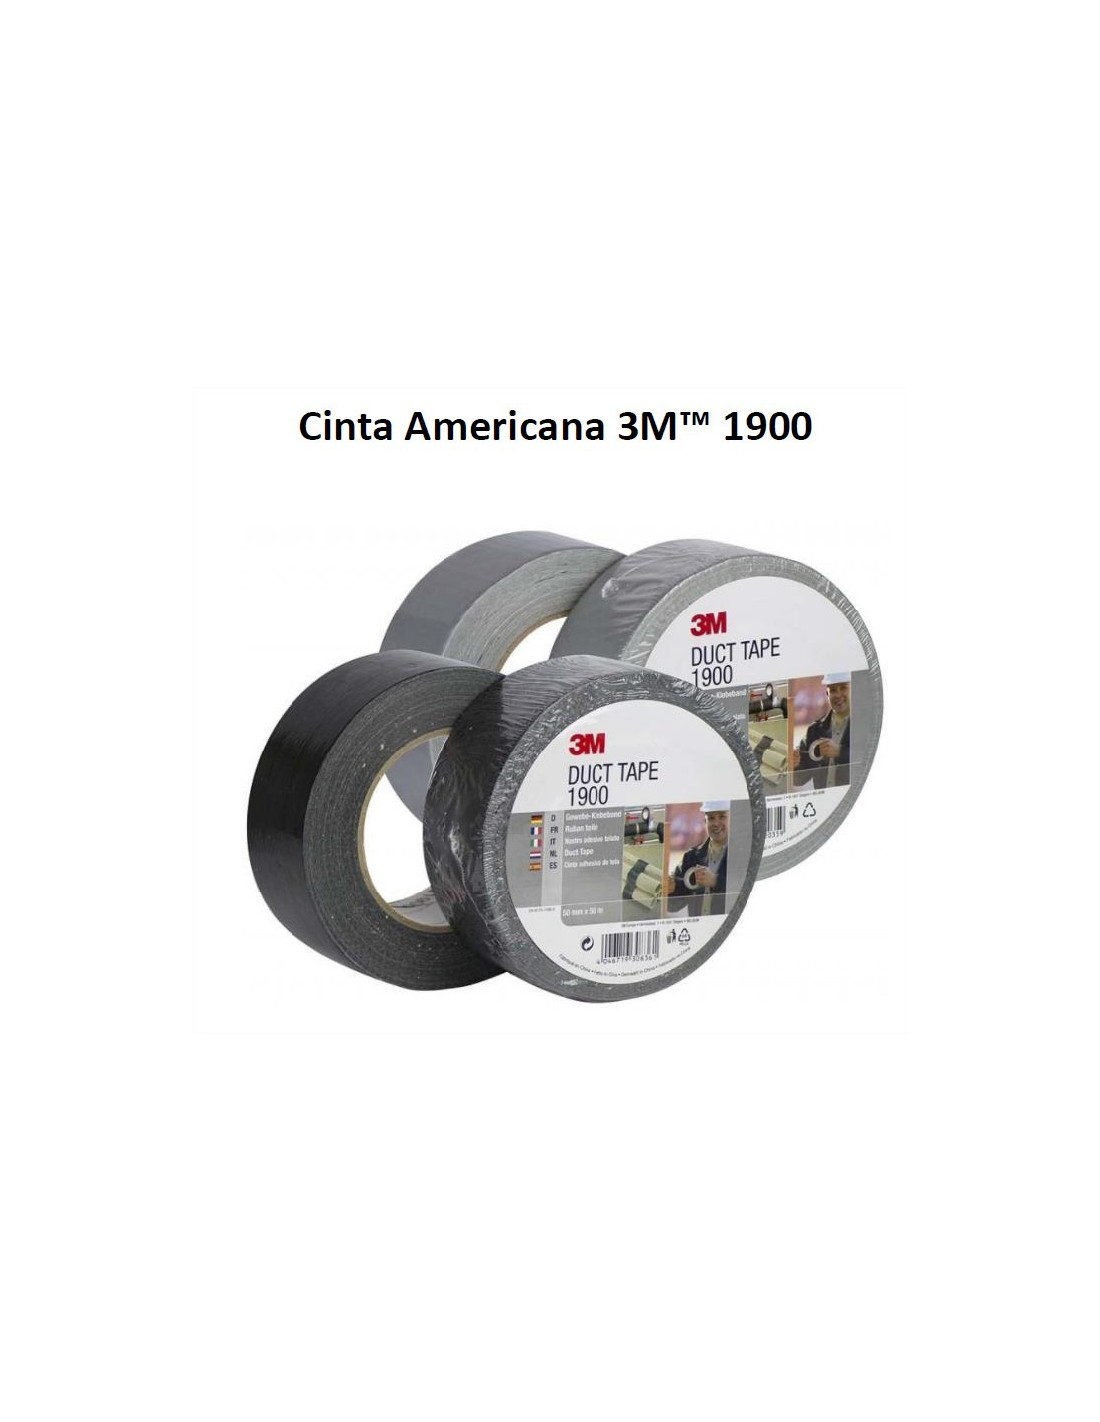 3M - CINTA AMERICANA 3M GRIS PLATA, 50mm x 50m